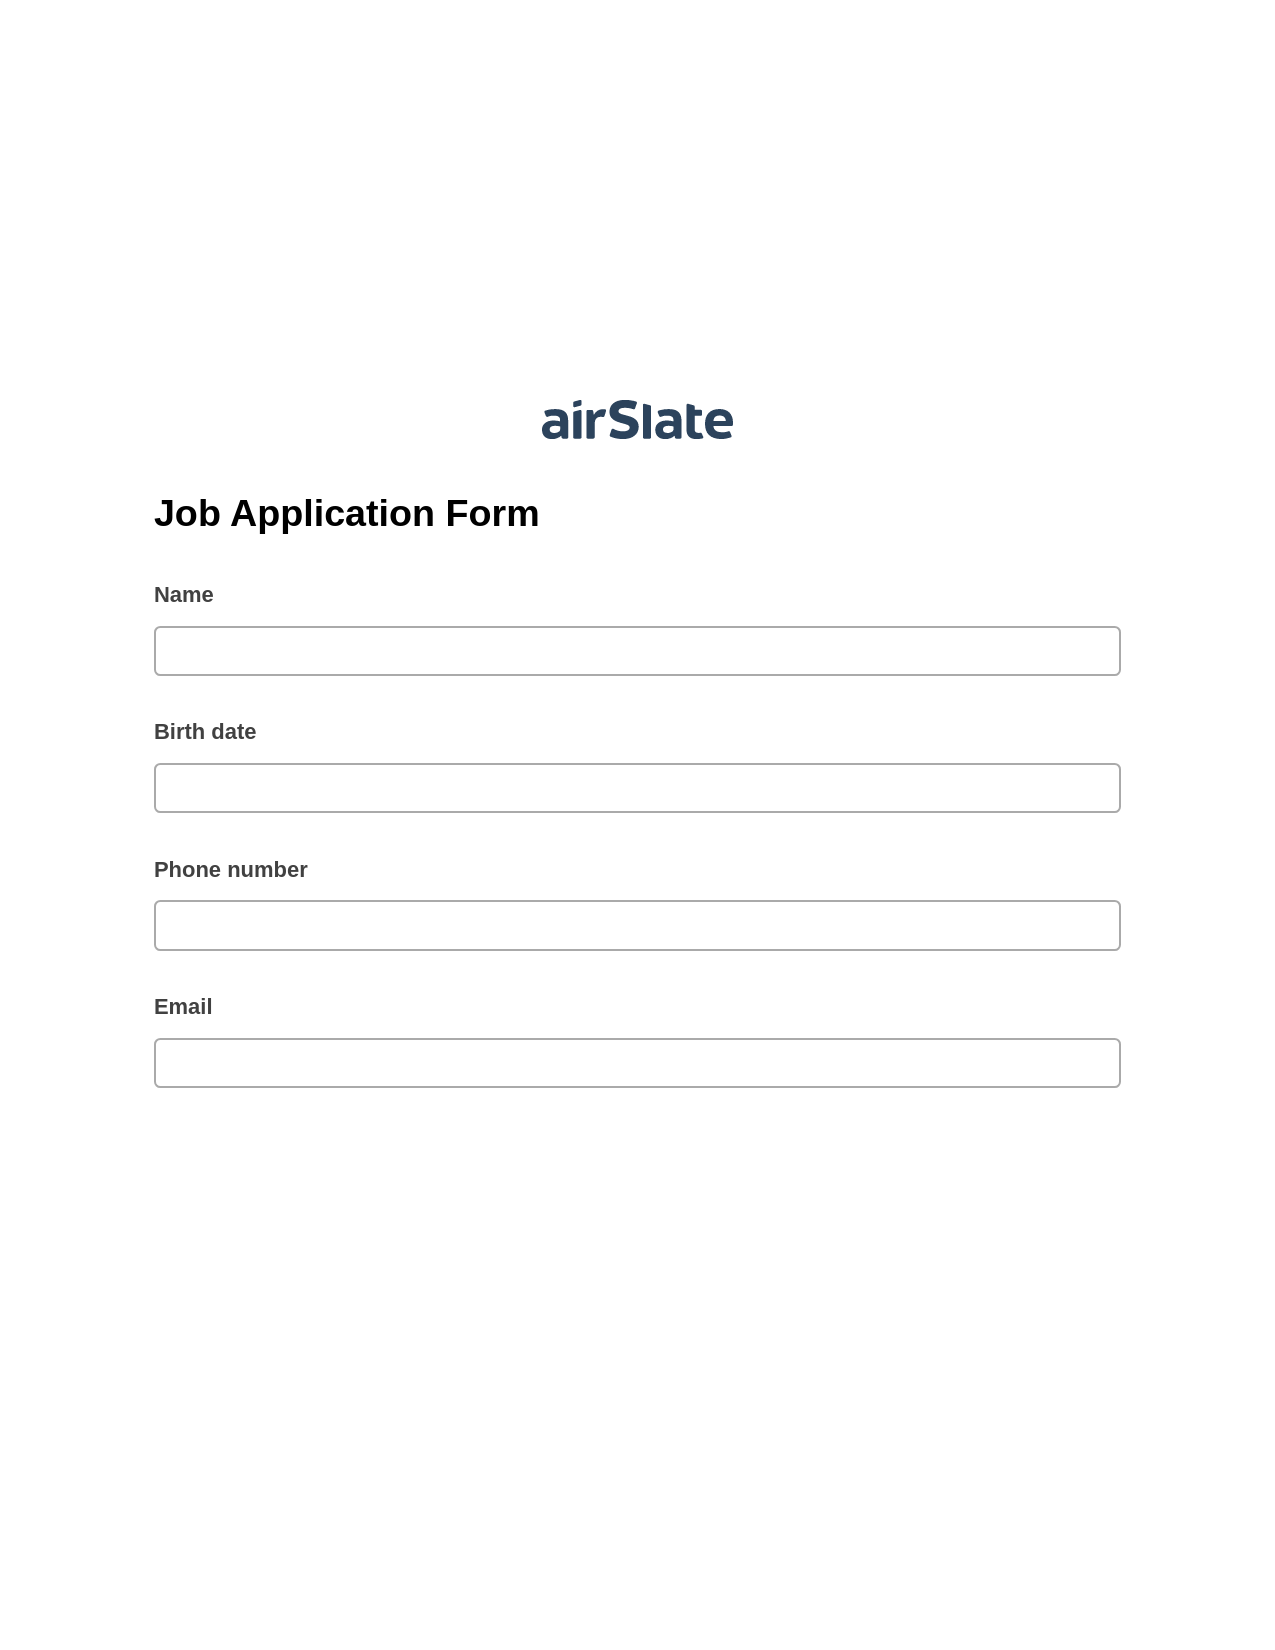 Job Application Form Pre-fill from MySQL Dropdown Options Bot, Webhook Bot, Export to MySQL Bot